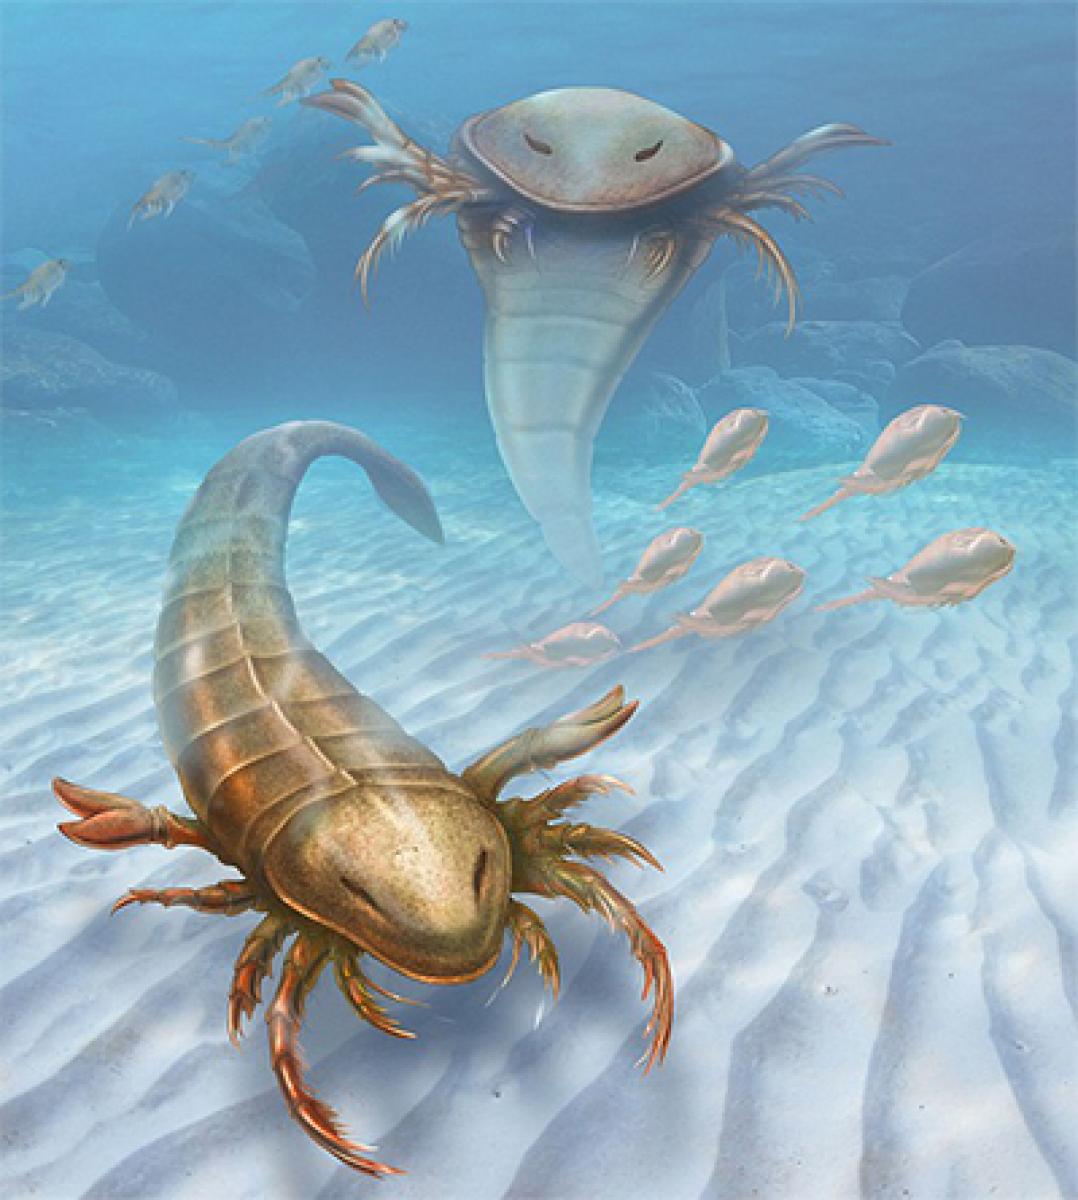 Meet monster like sea scorpion from ancient seas